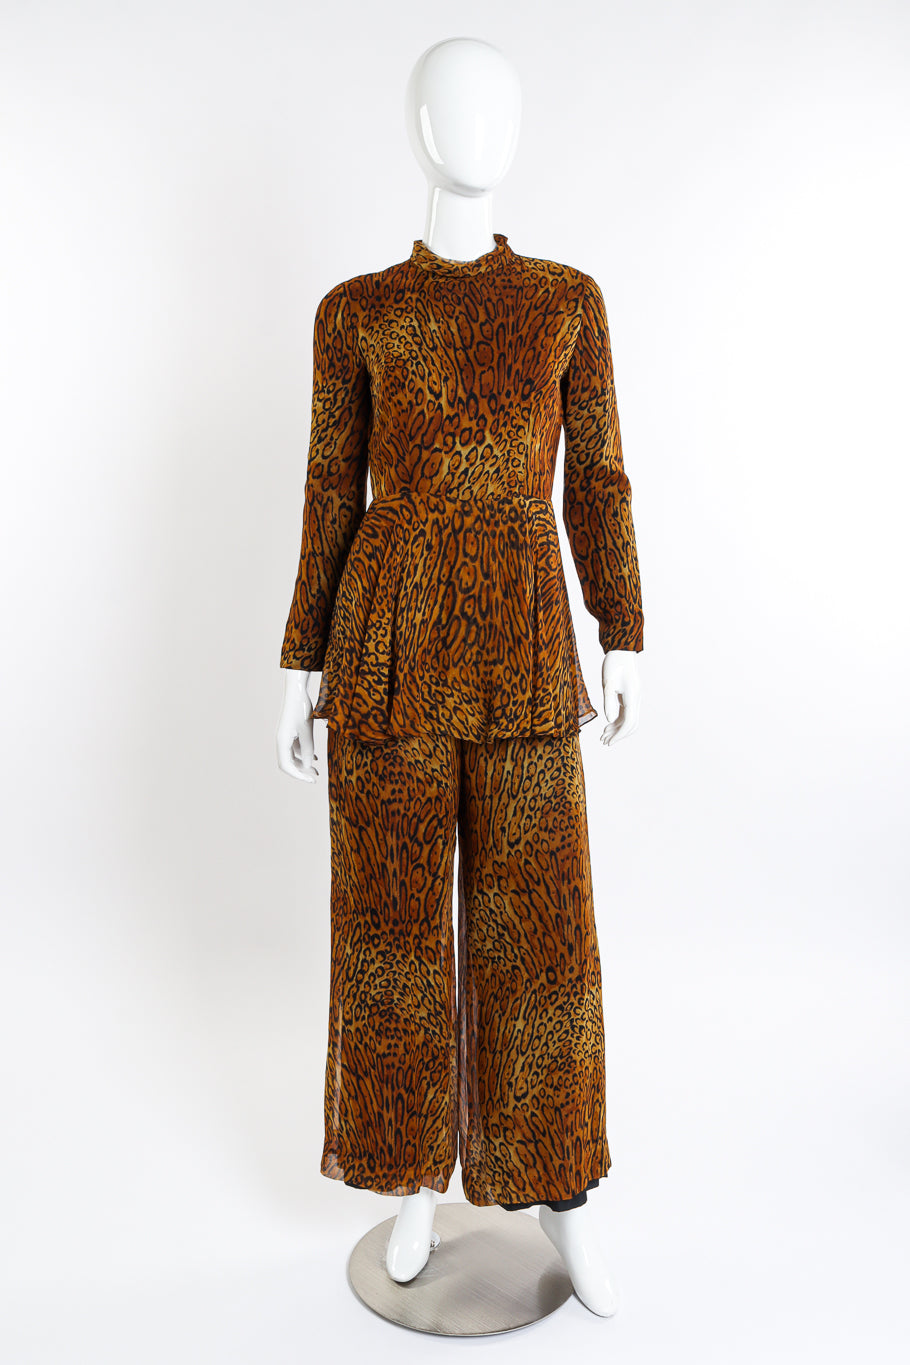 Vintage Oscar de la Renta Leopard Silk Jumpsuit front on mannequin @recessla